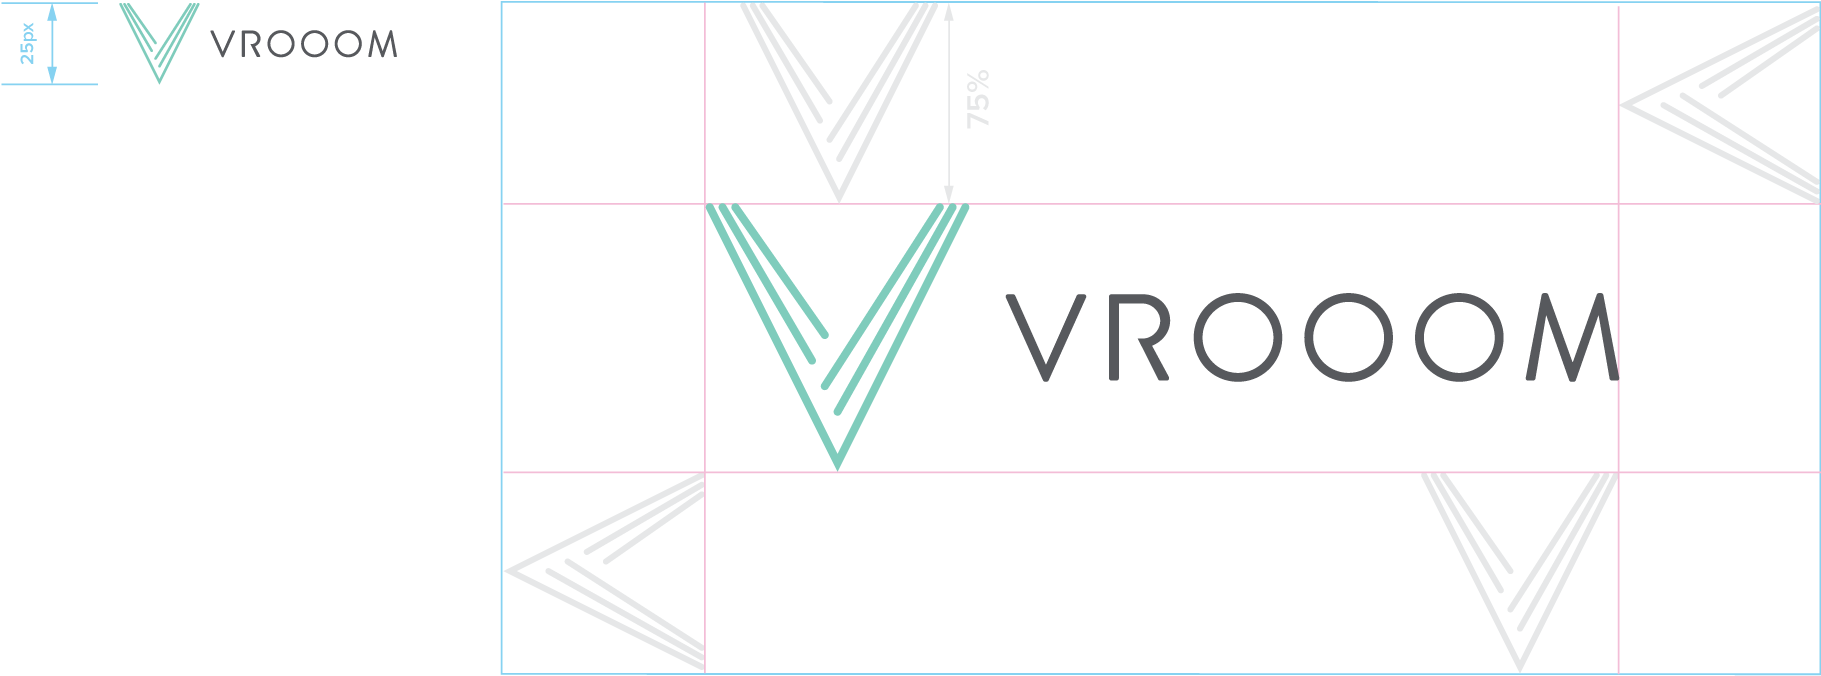 VROOOM Logo Clear space guidance